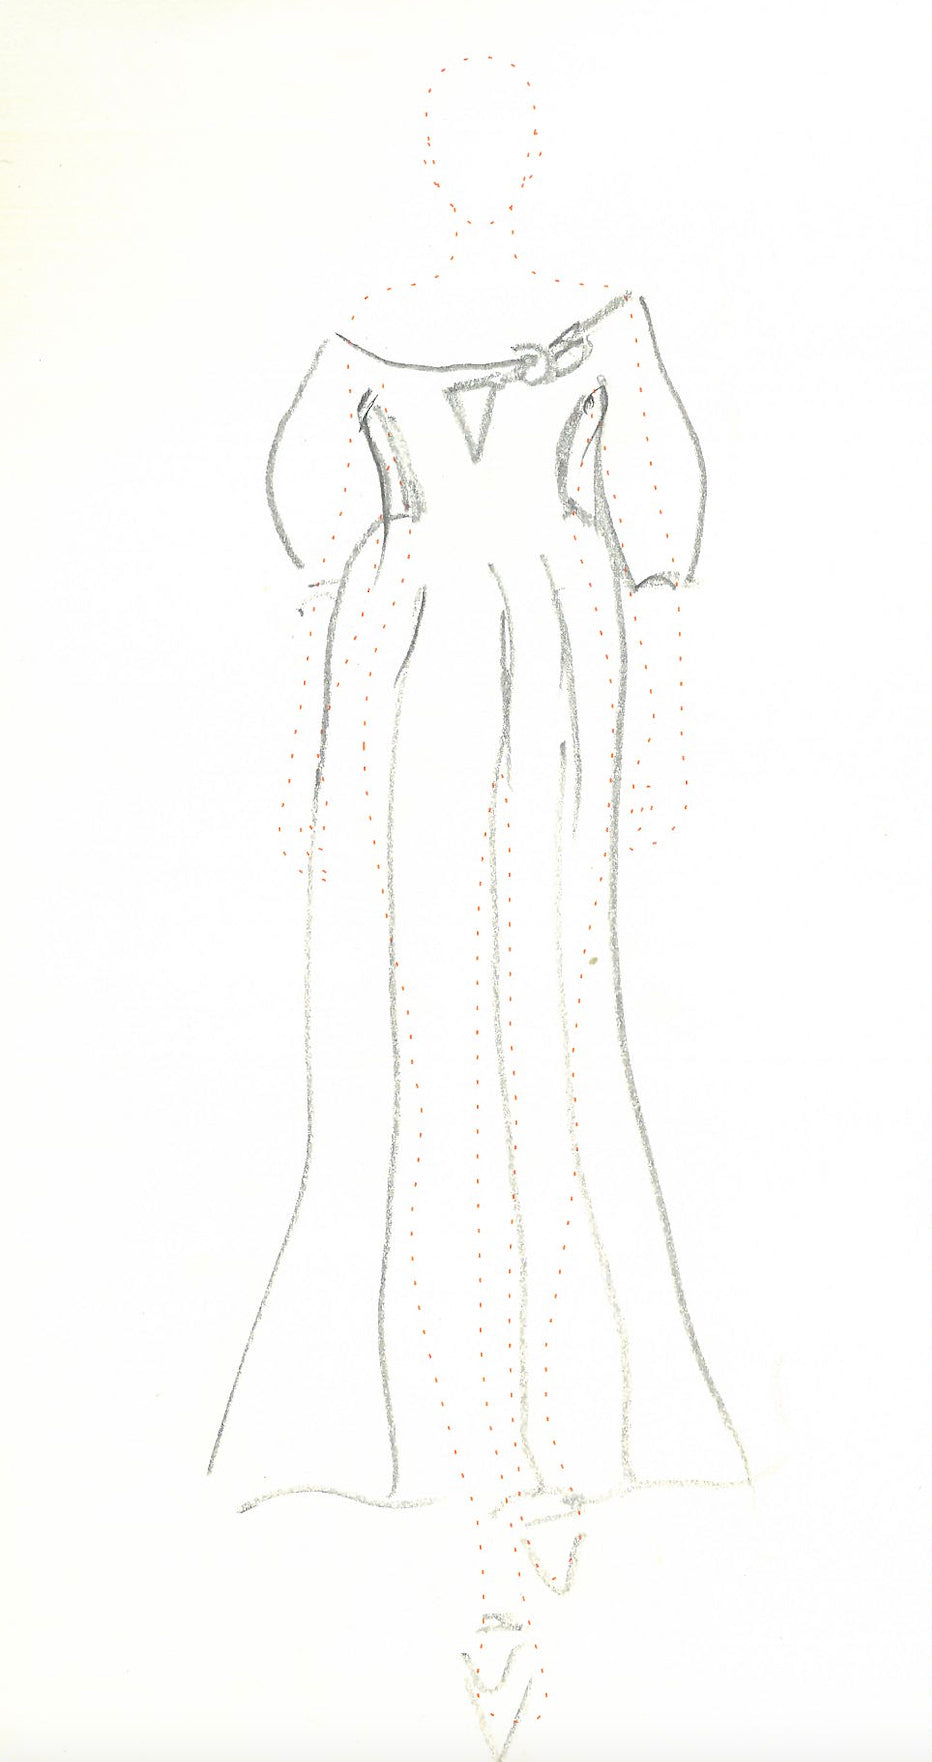 Madyn Sequin Dress in Ivory Wool